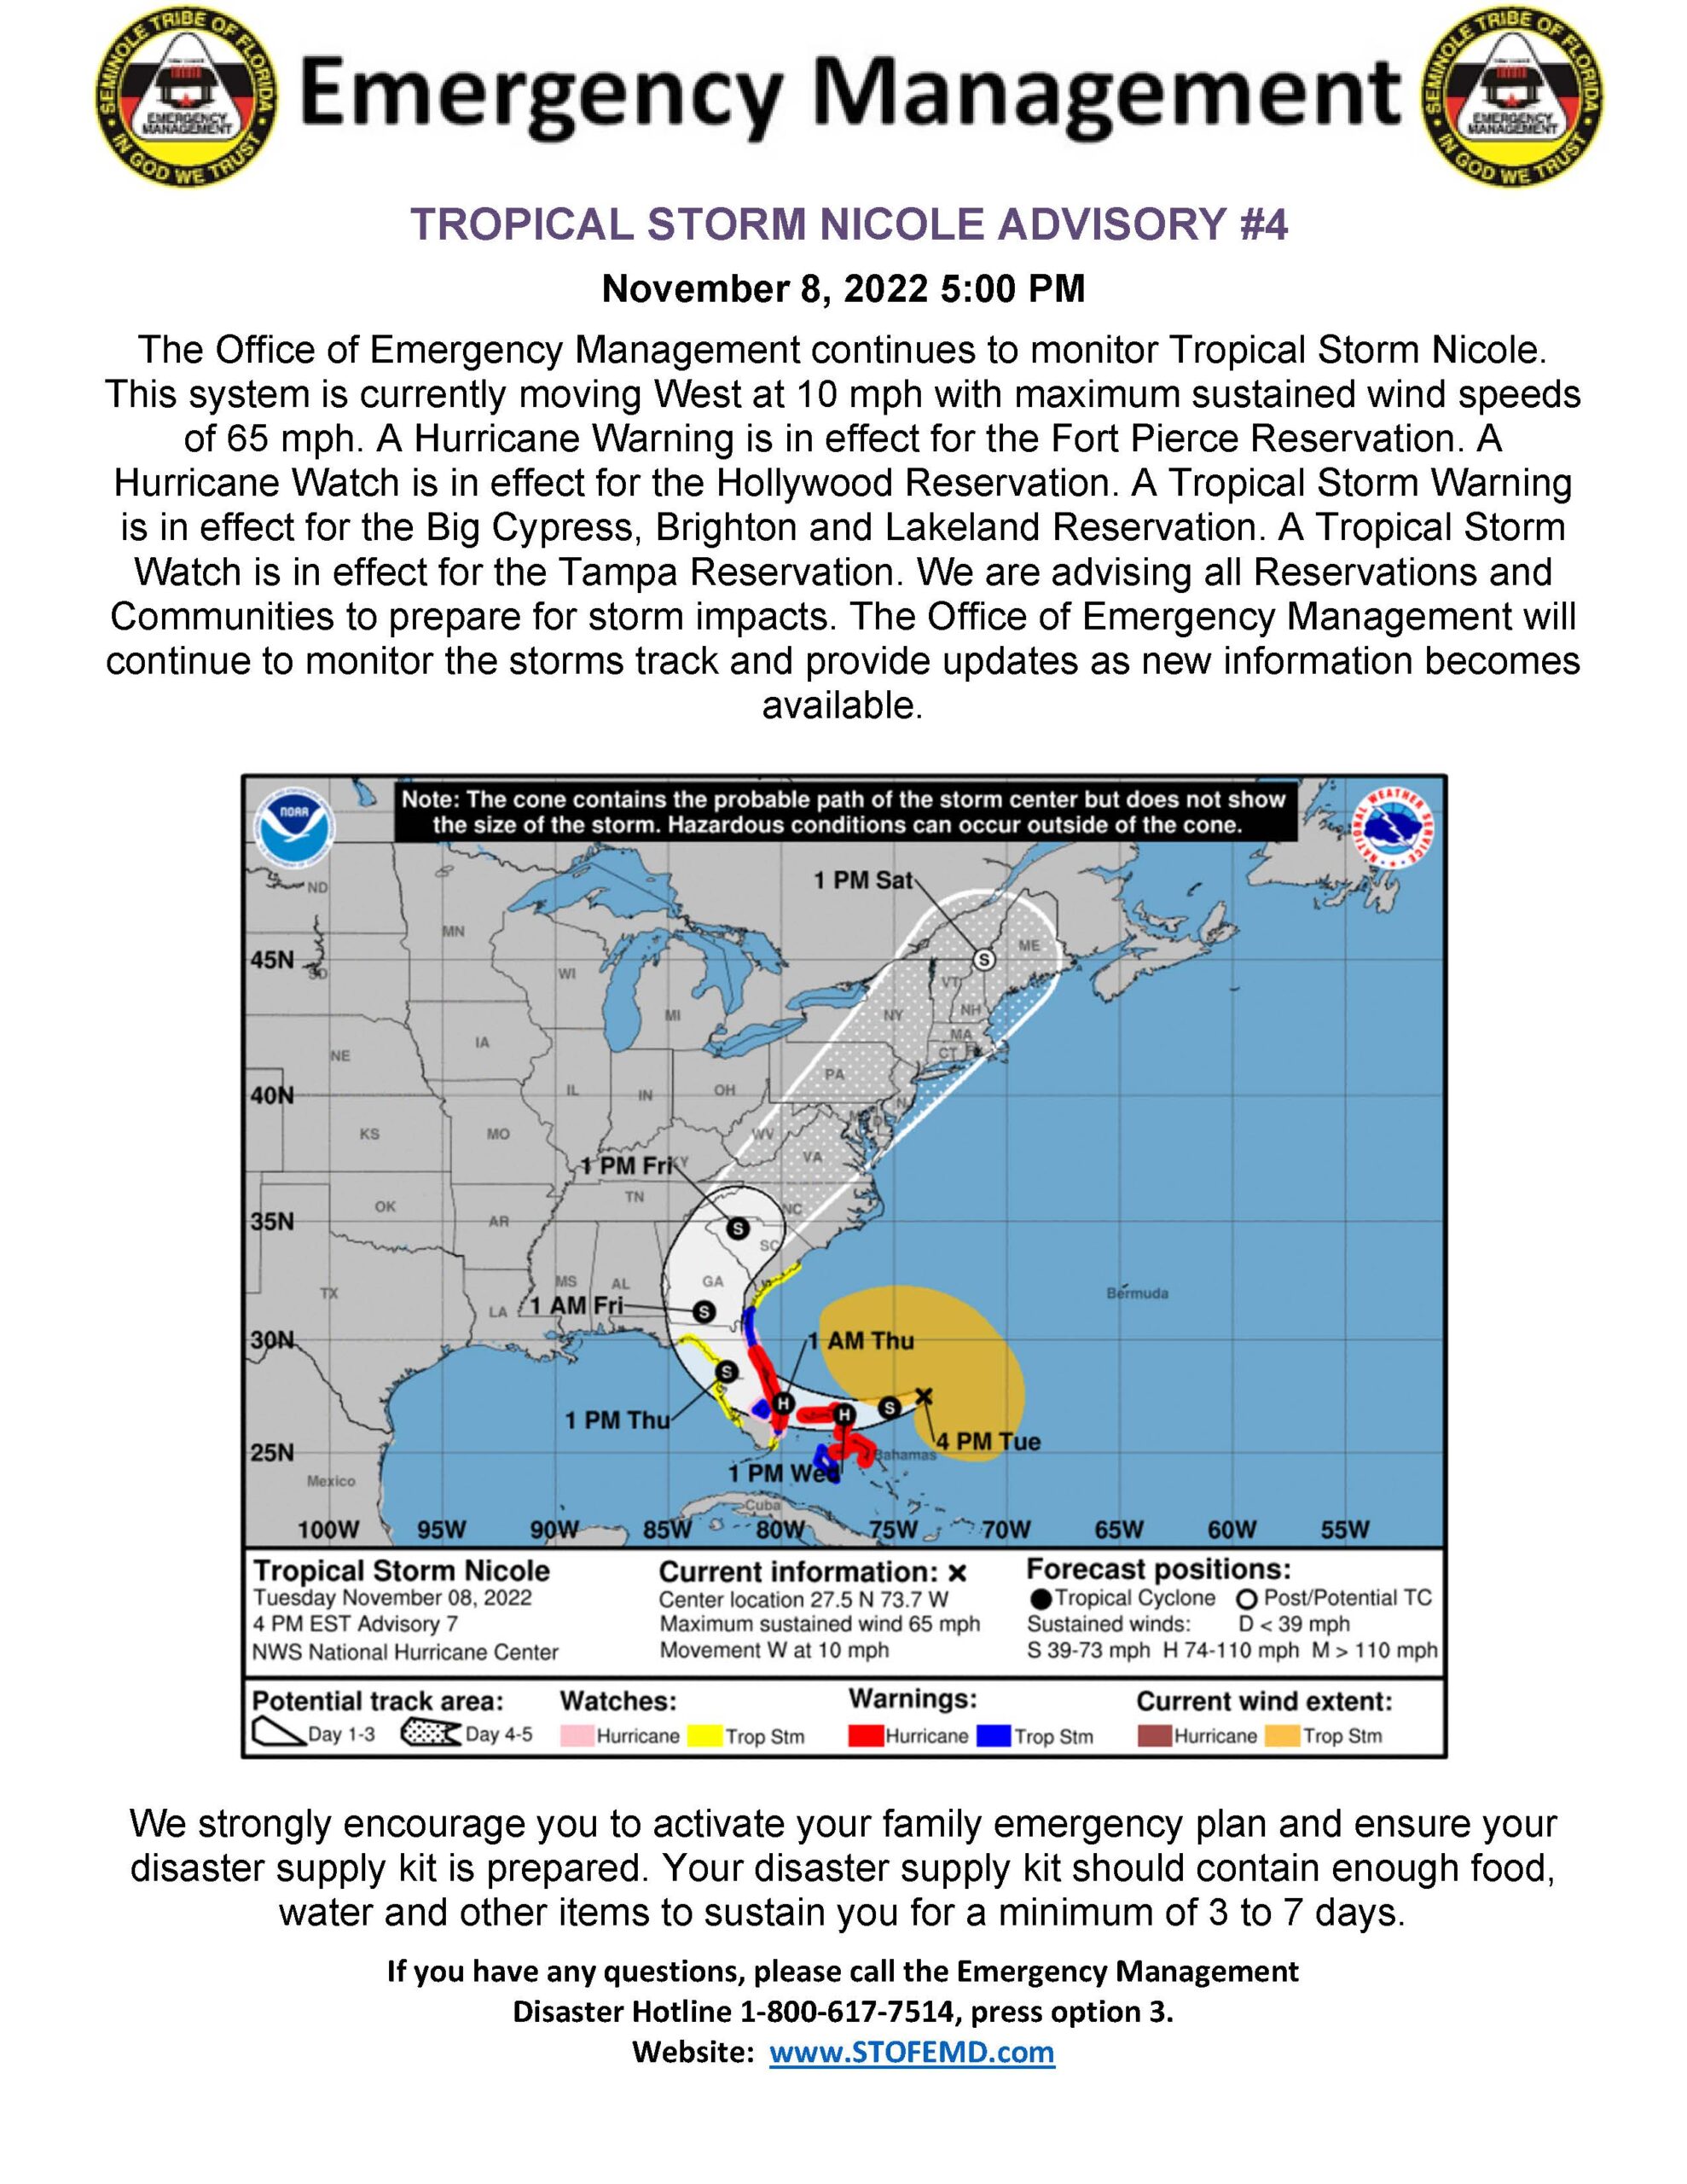 hurricane nicole travel advisory